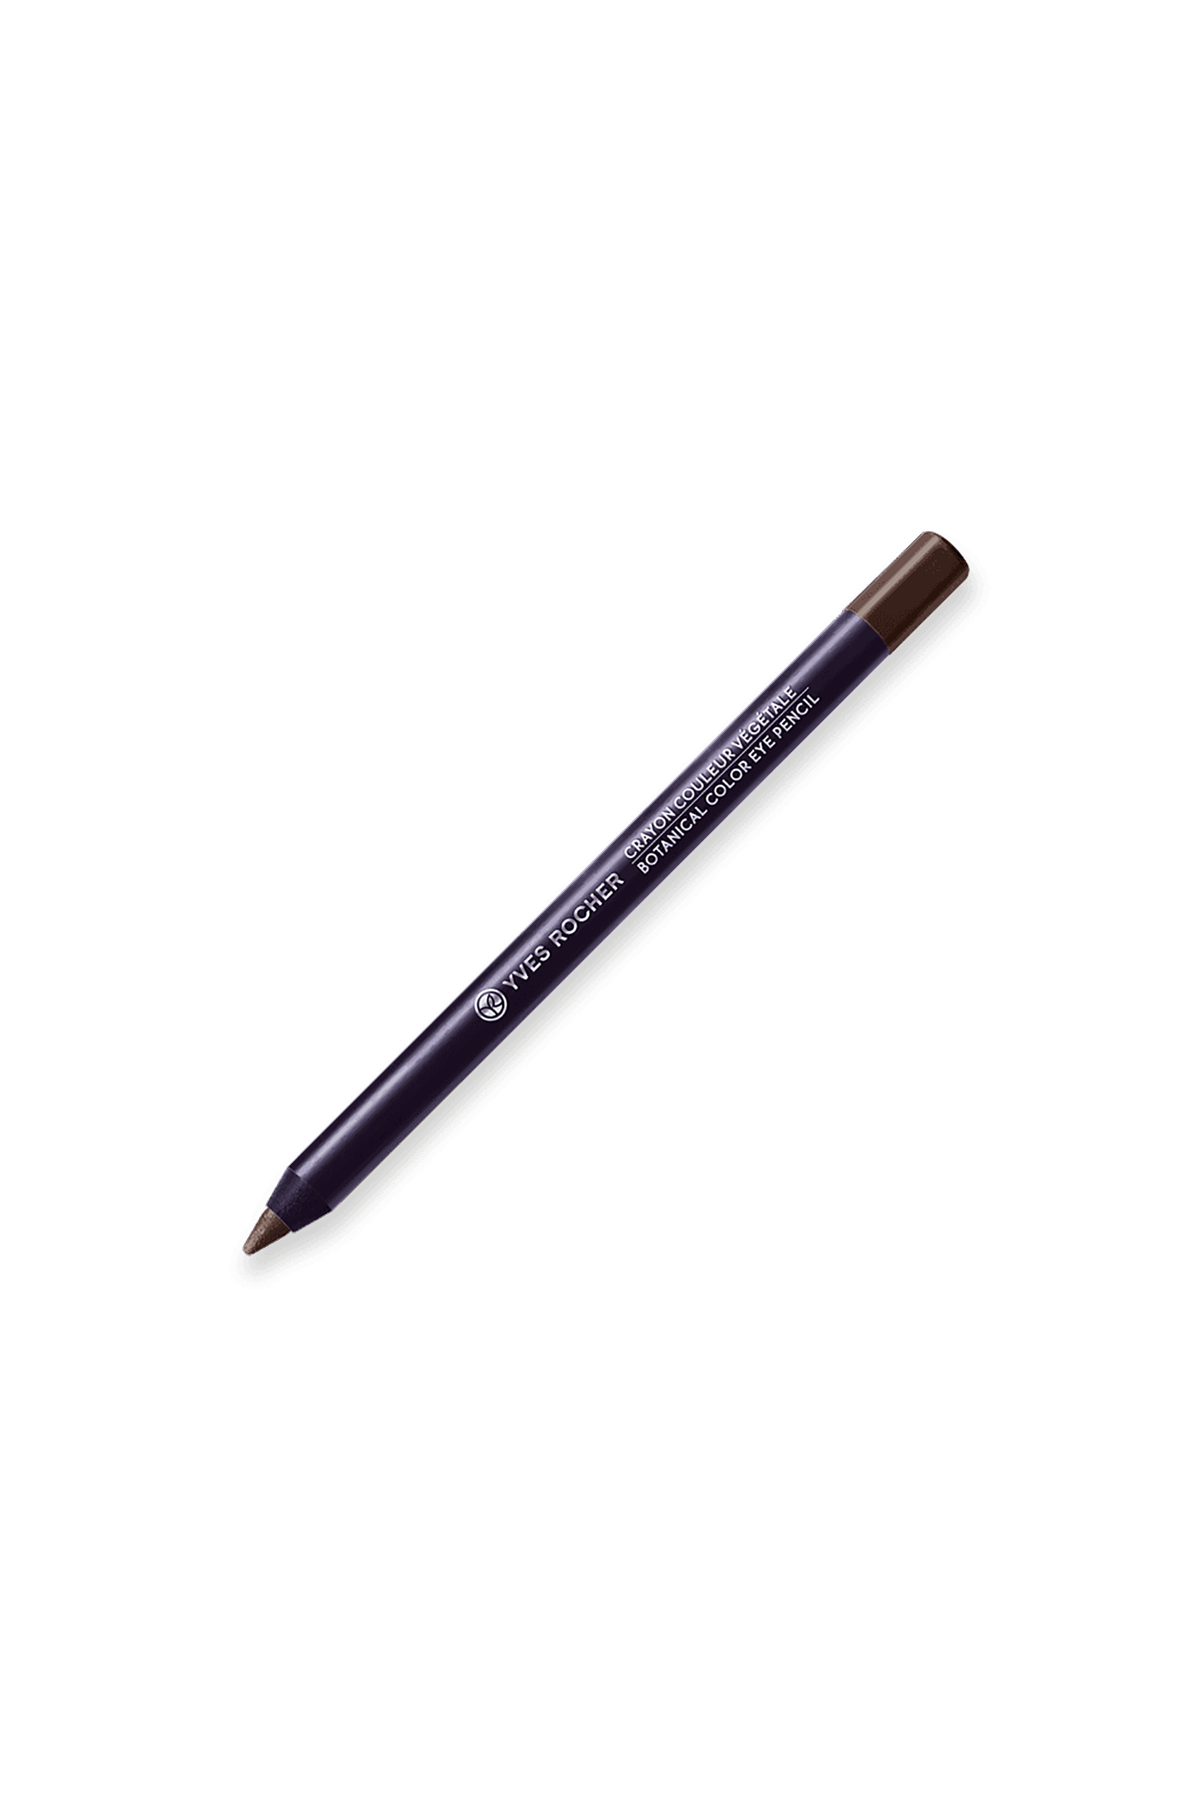 Botanical Color Eye Pencil Brun 1, 2G